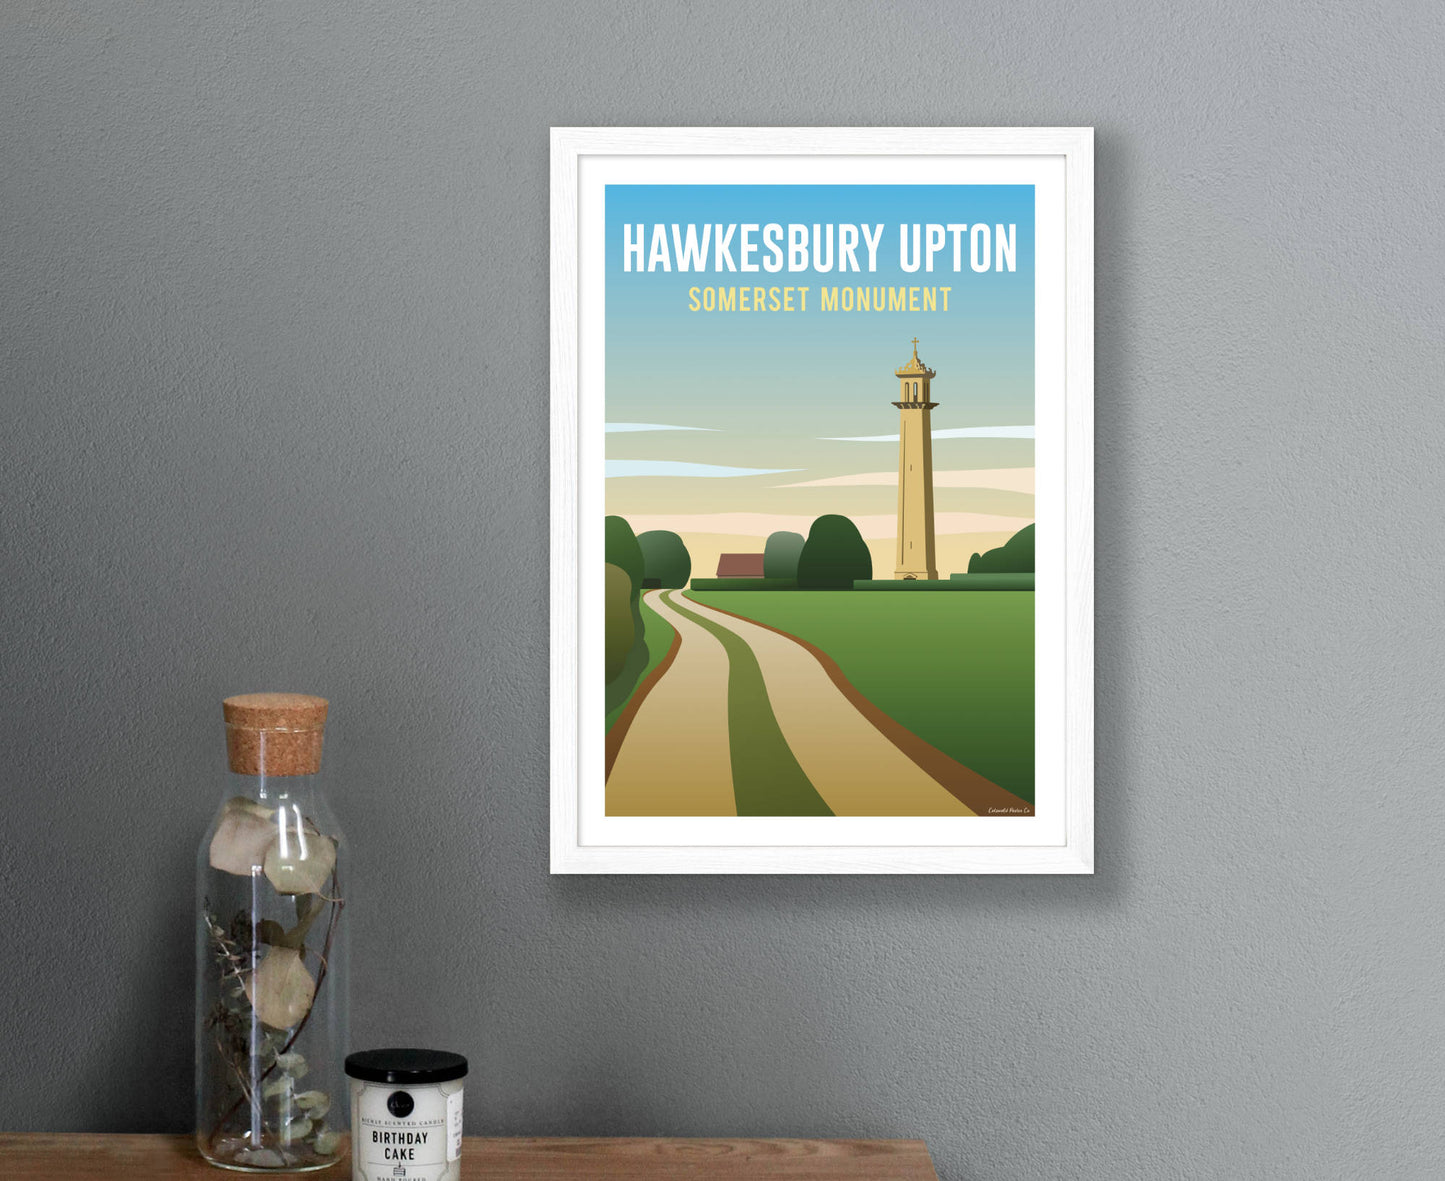 Hawkesbury Upton Poster